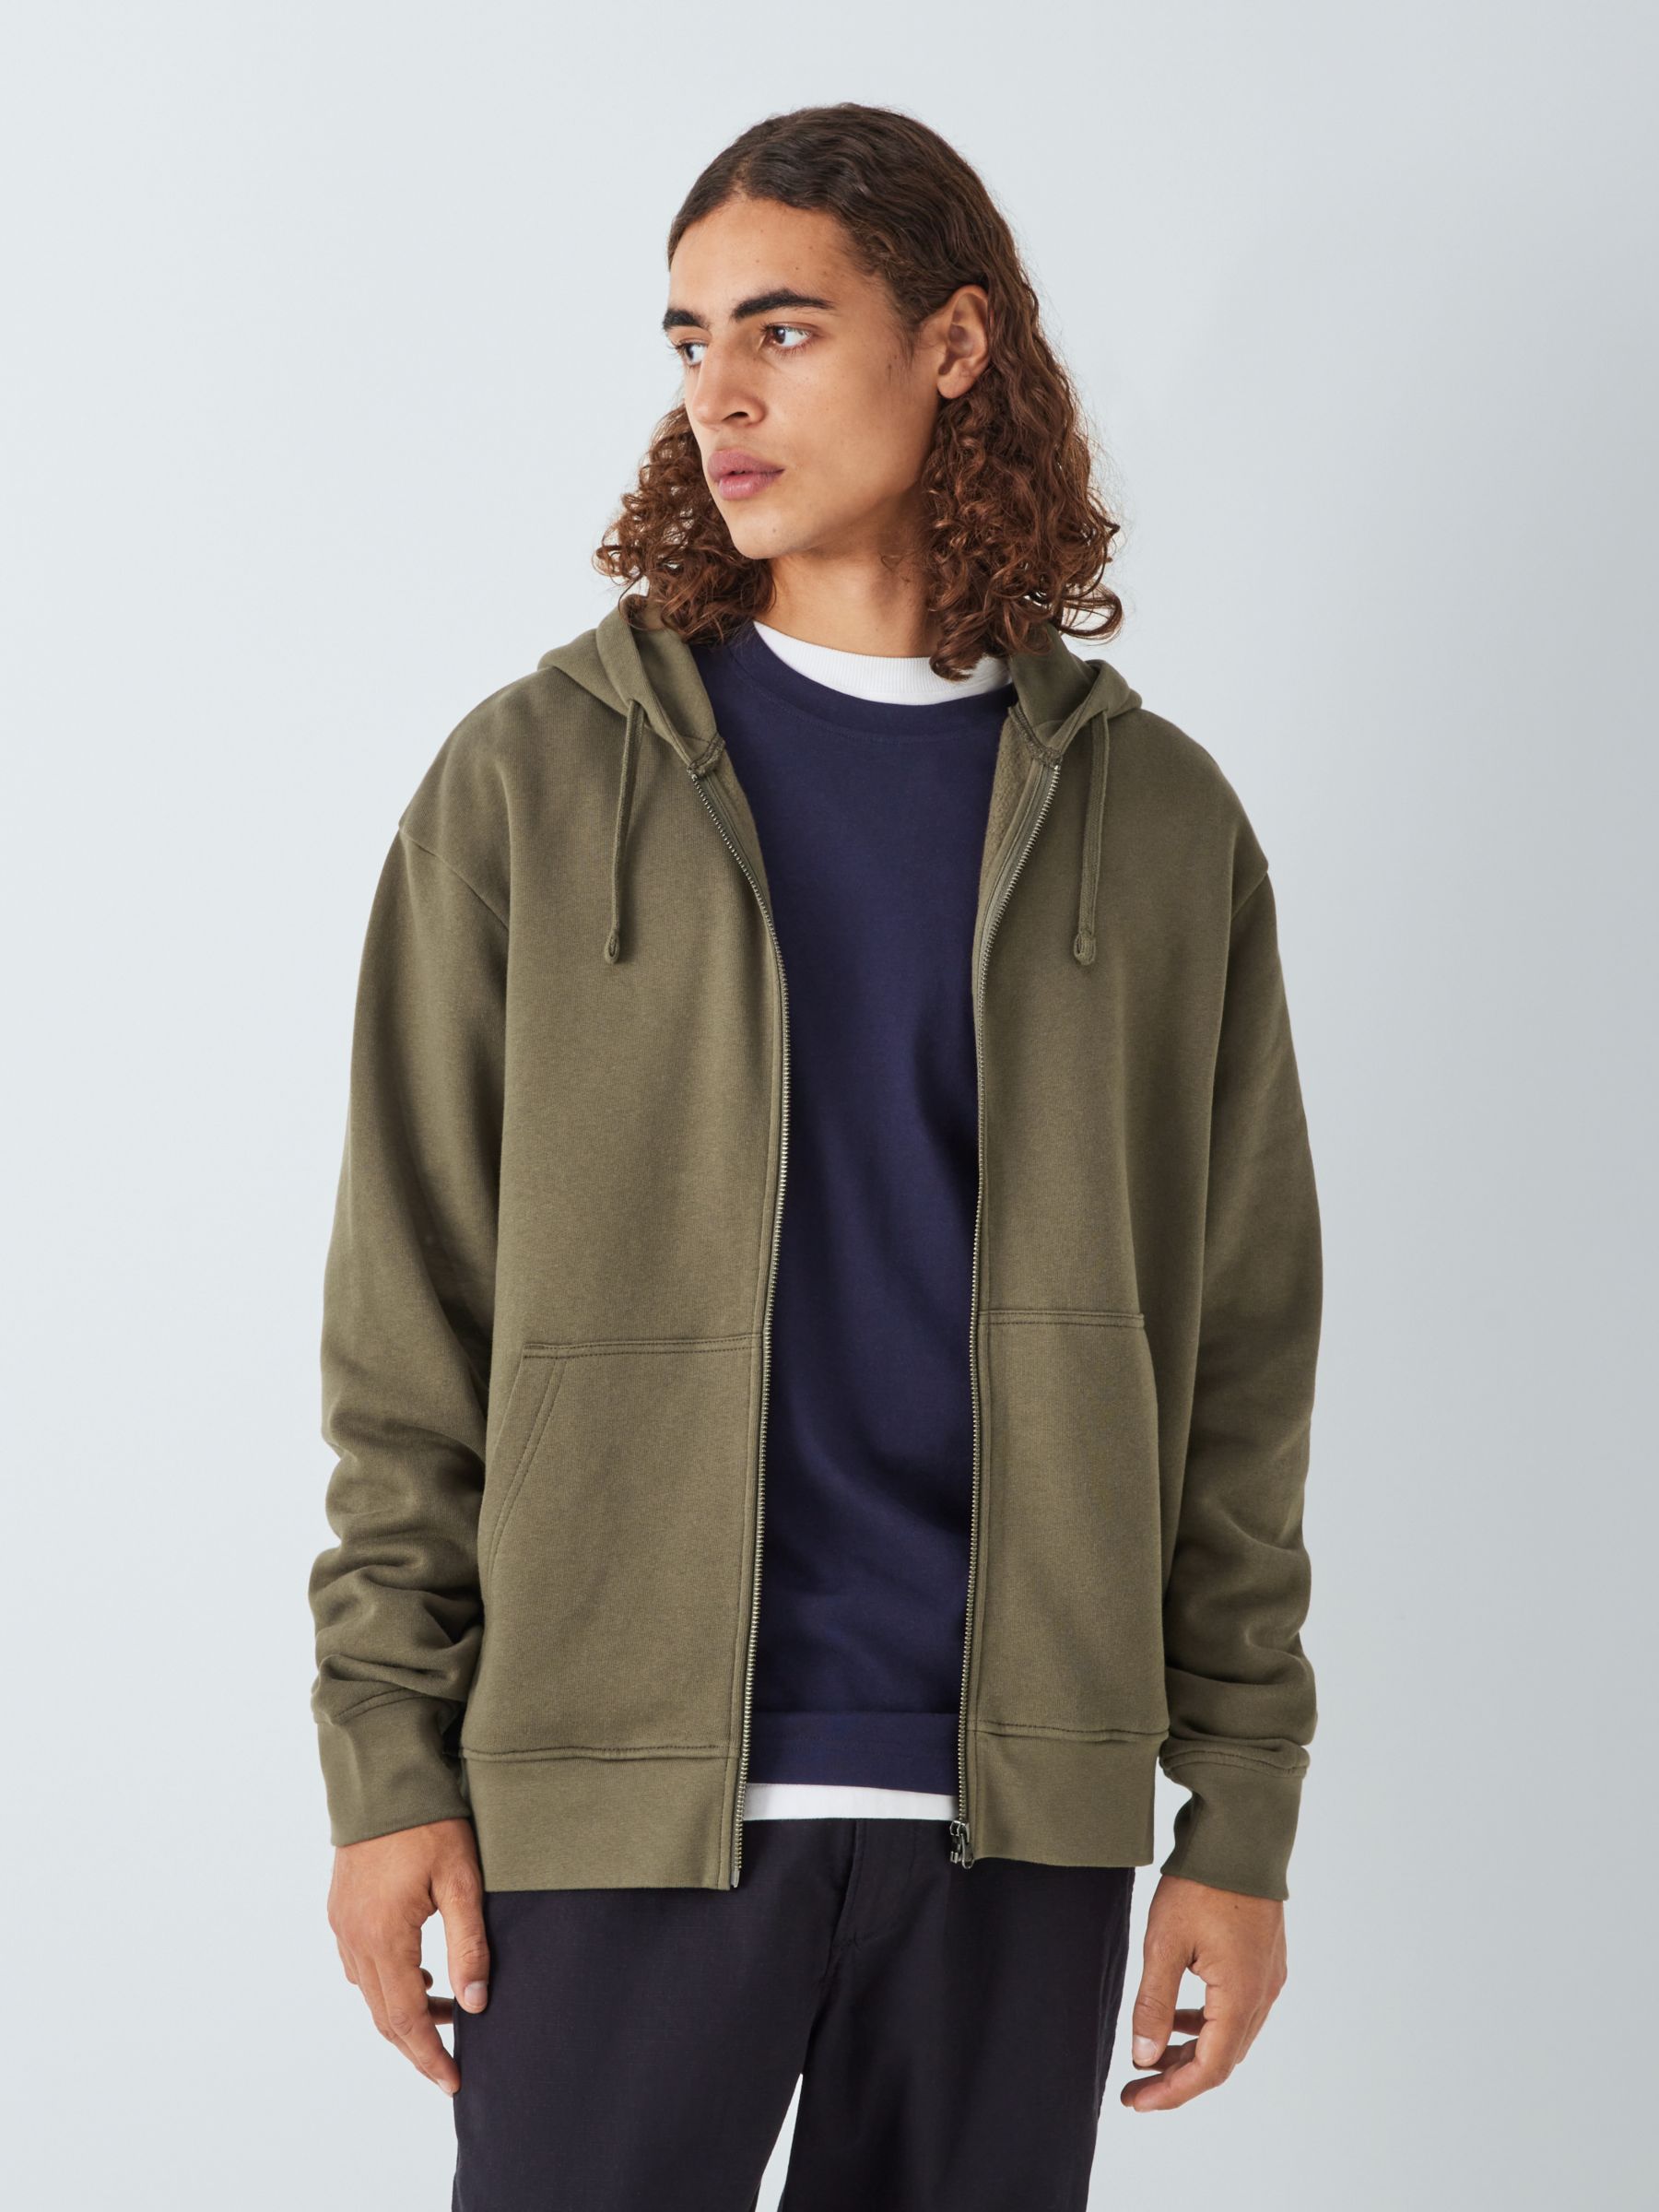 Men's Sweatshirts & Hoodies - Green, Size: XL | John Lewis & Partners